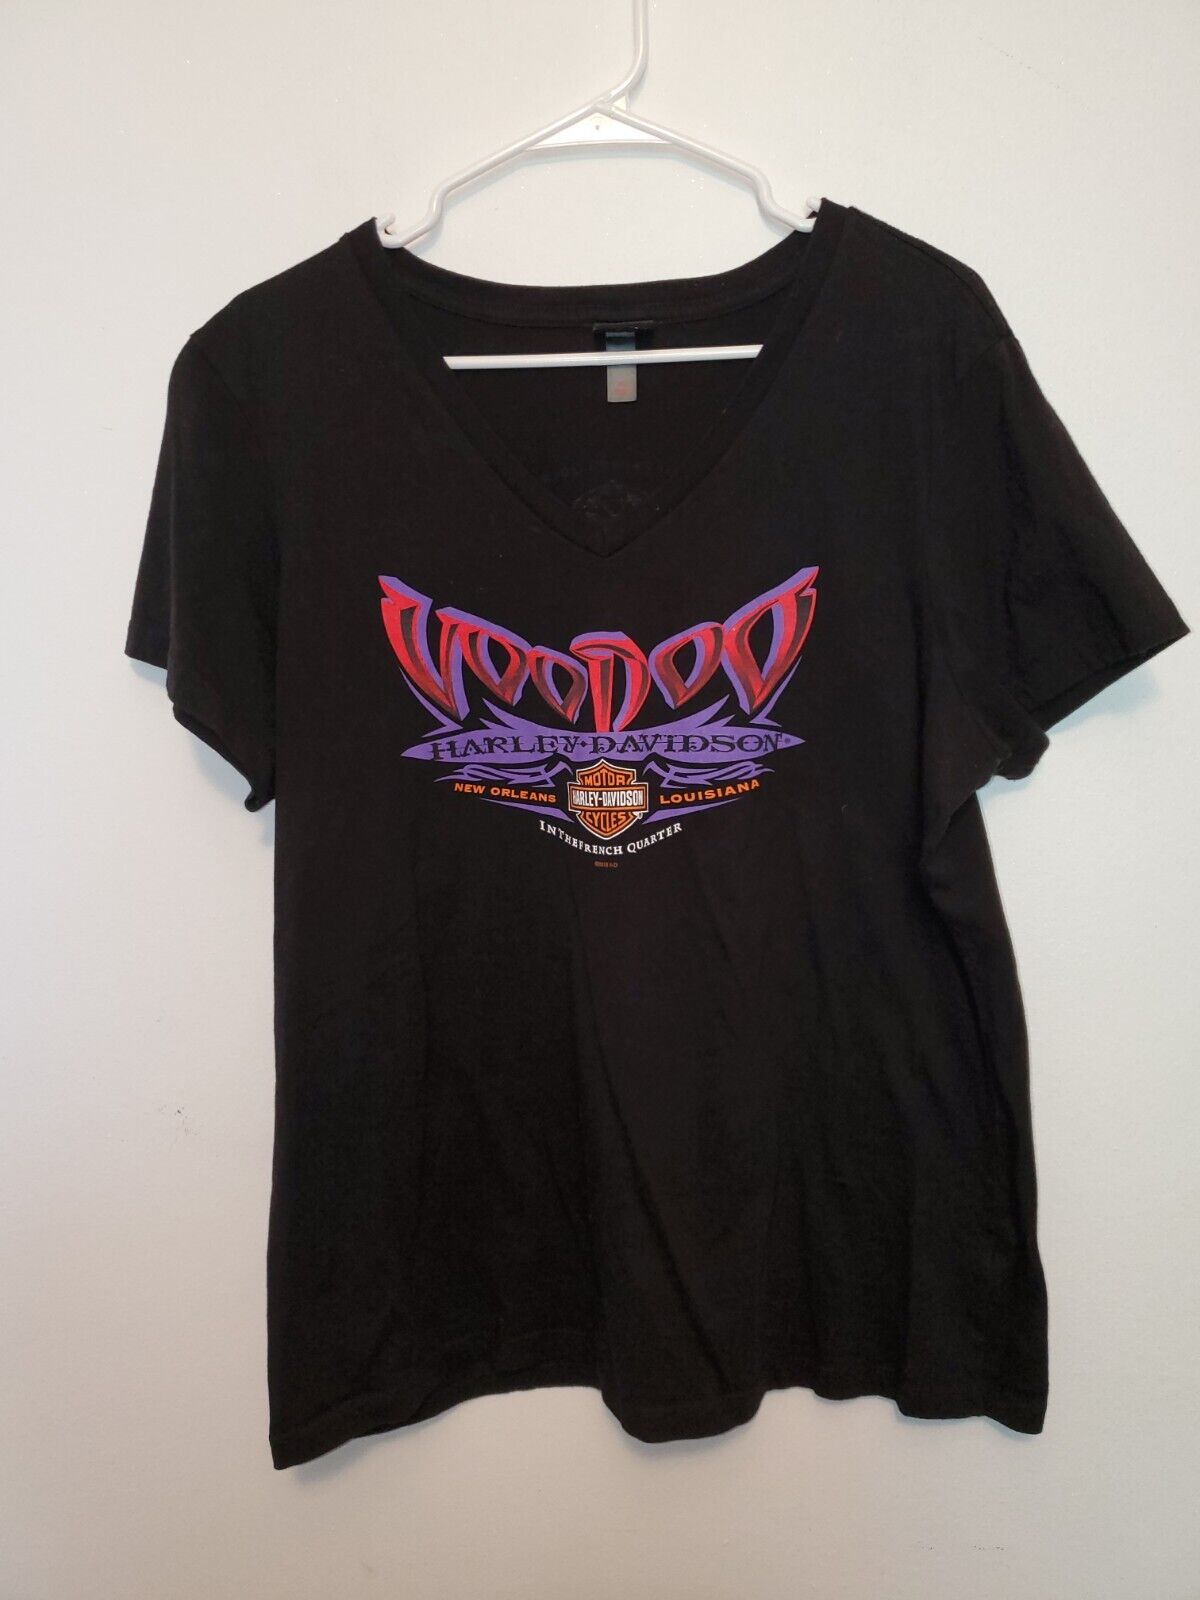 Harley Davidson New Orleans Voodoo t-shirt 2018 XL